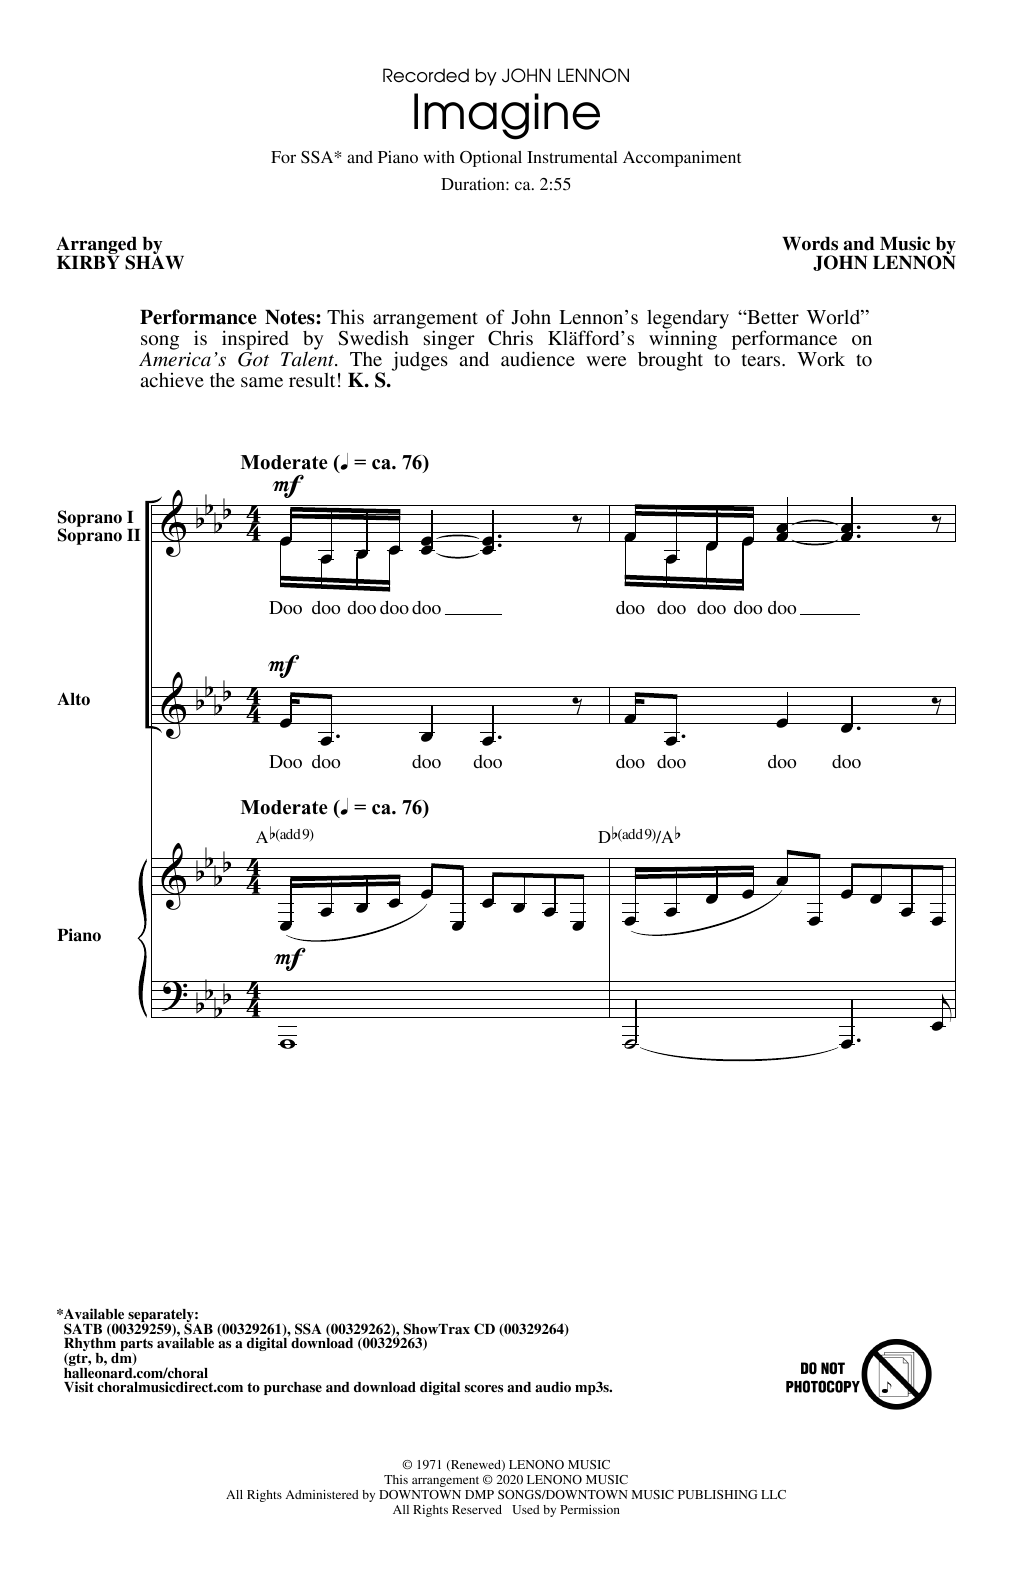 John Lennon Imagine (arr. Kirby Shaw) Sheet Music Notes & Chords for SAB Choir - Download or Print PDF